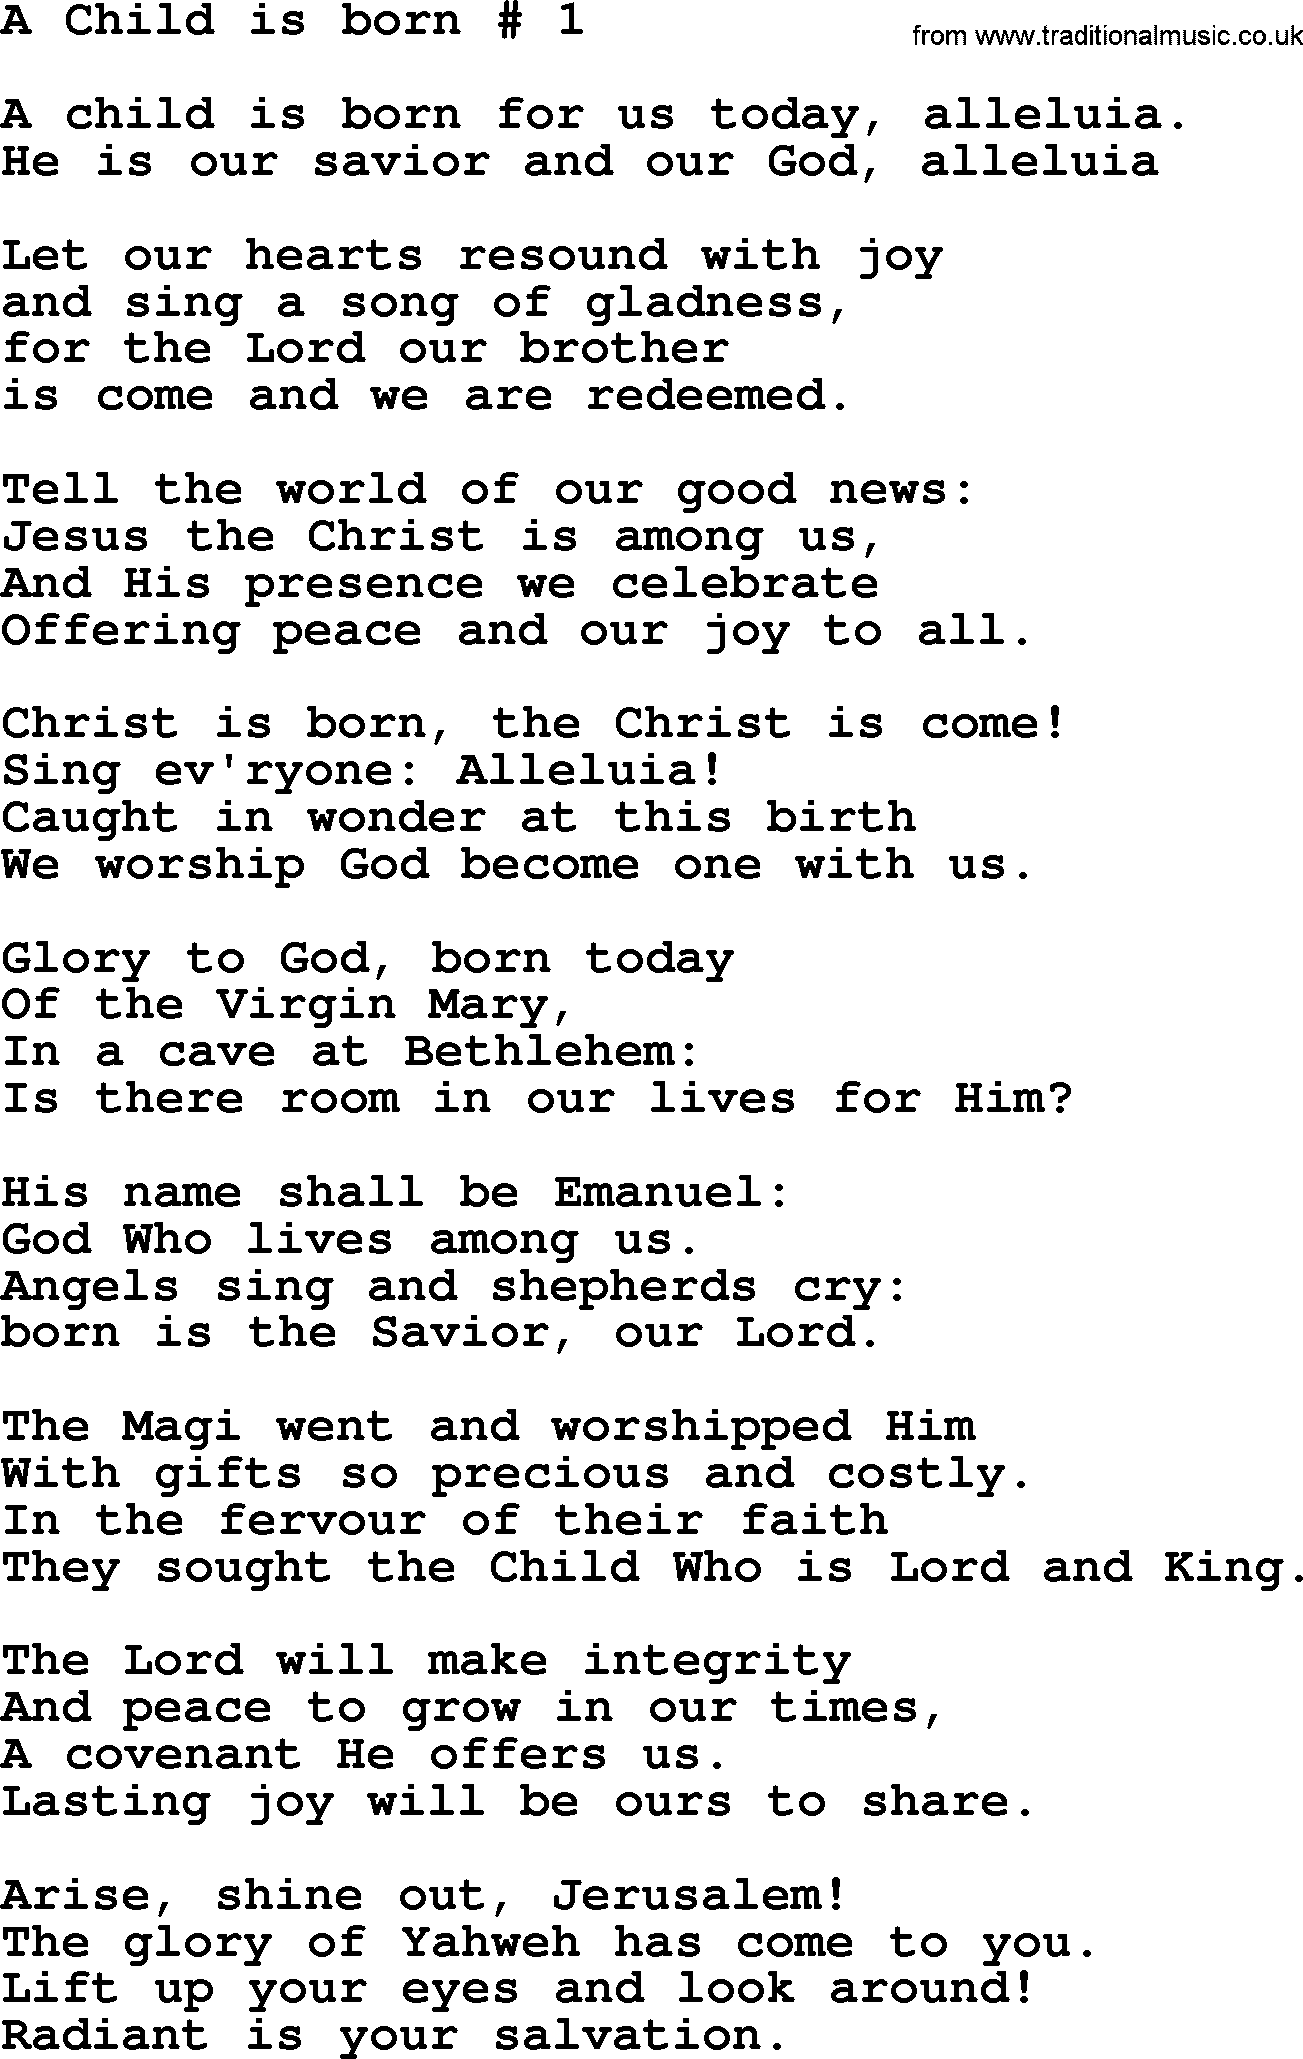 Catholic Hymn: A Child Is Born1 lyrics with PDF